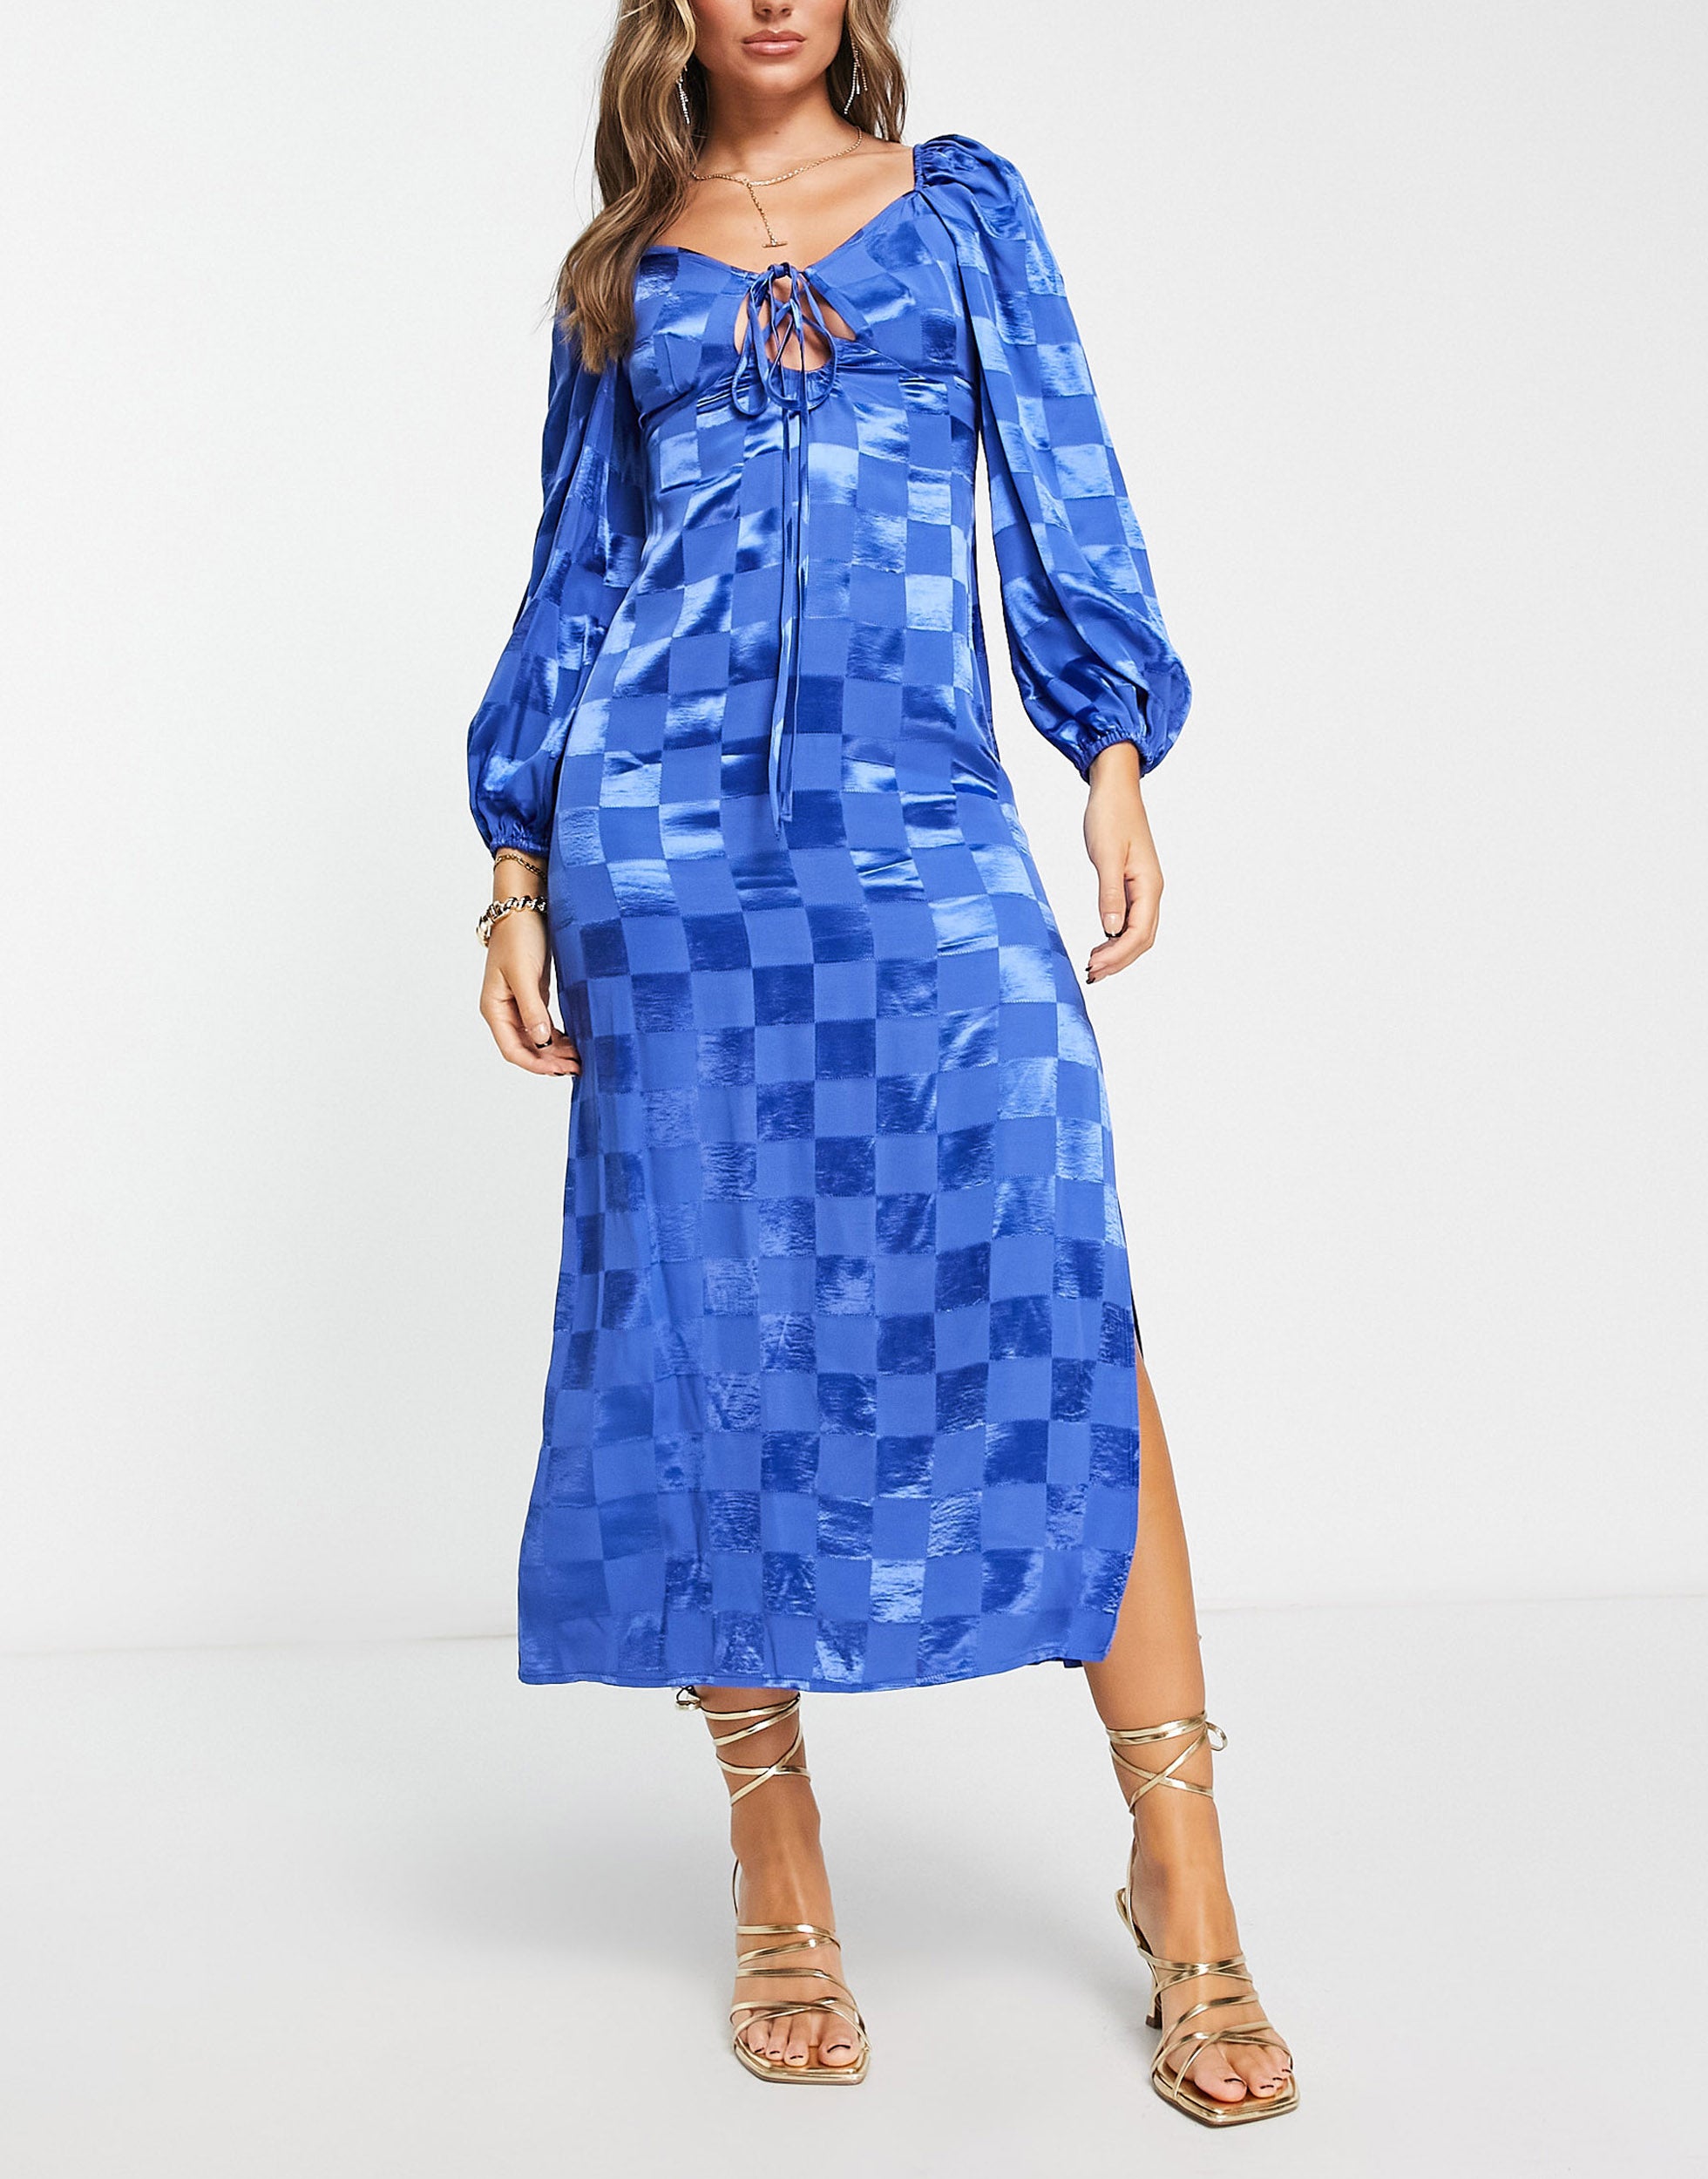 ASOS DESIGN satin checkerboard jacquard midi dress with tie neck detail in blue